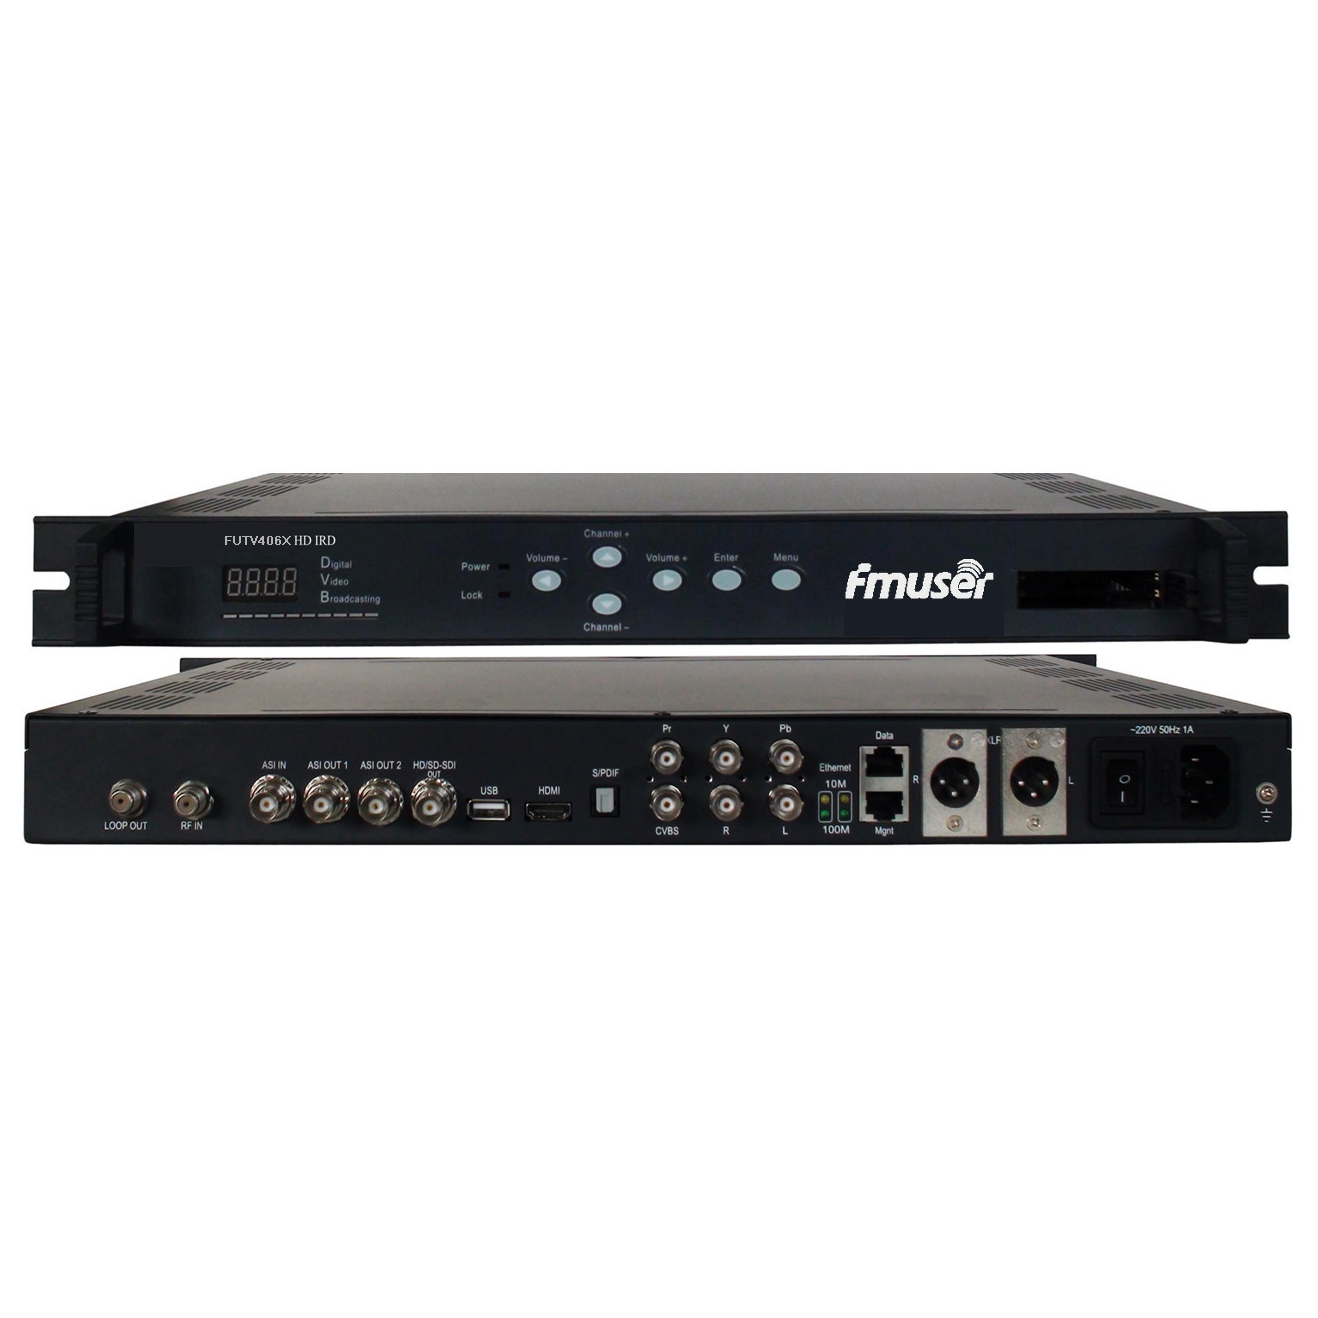 FMUSER FUTV406X HD IRD (1 DVB-S / S2 / T / C, ISDB-T RF Input, 1 ASI IP In, 2 ASI 1 IP Output, HDMI SDI CVBS XLR Out) với MUX & Biss